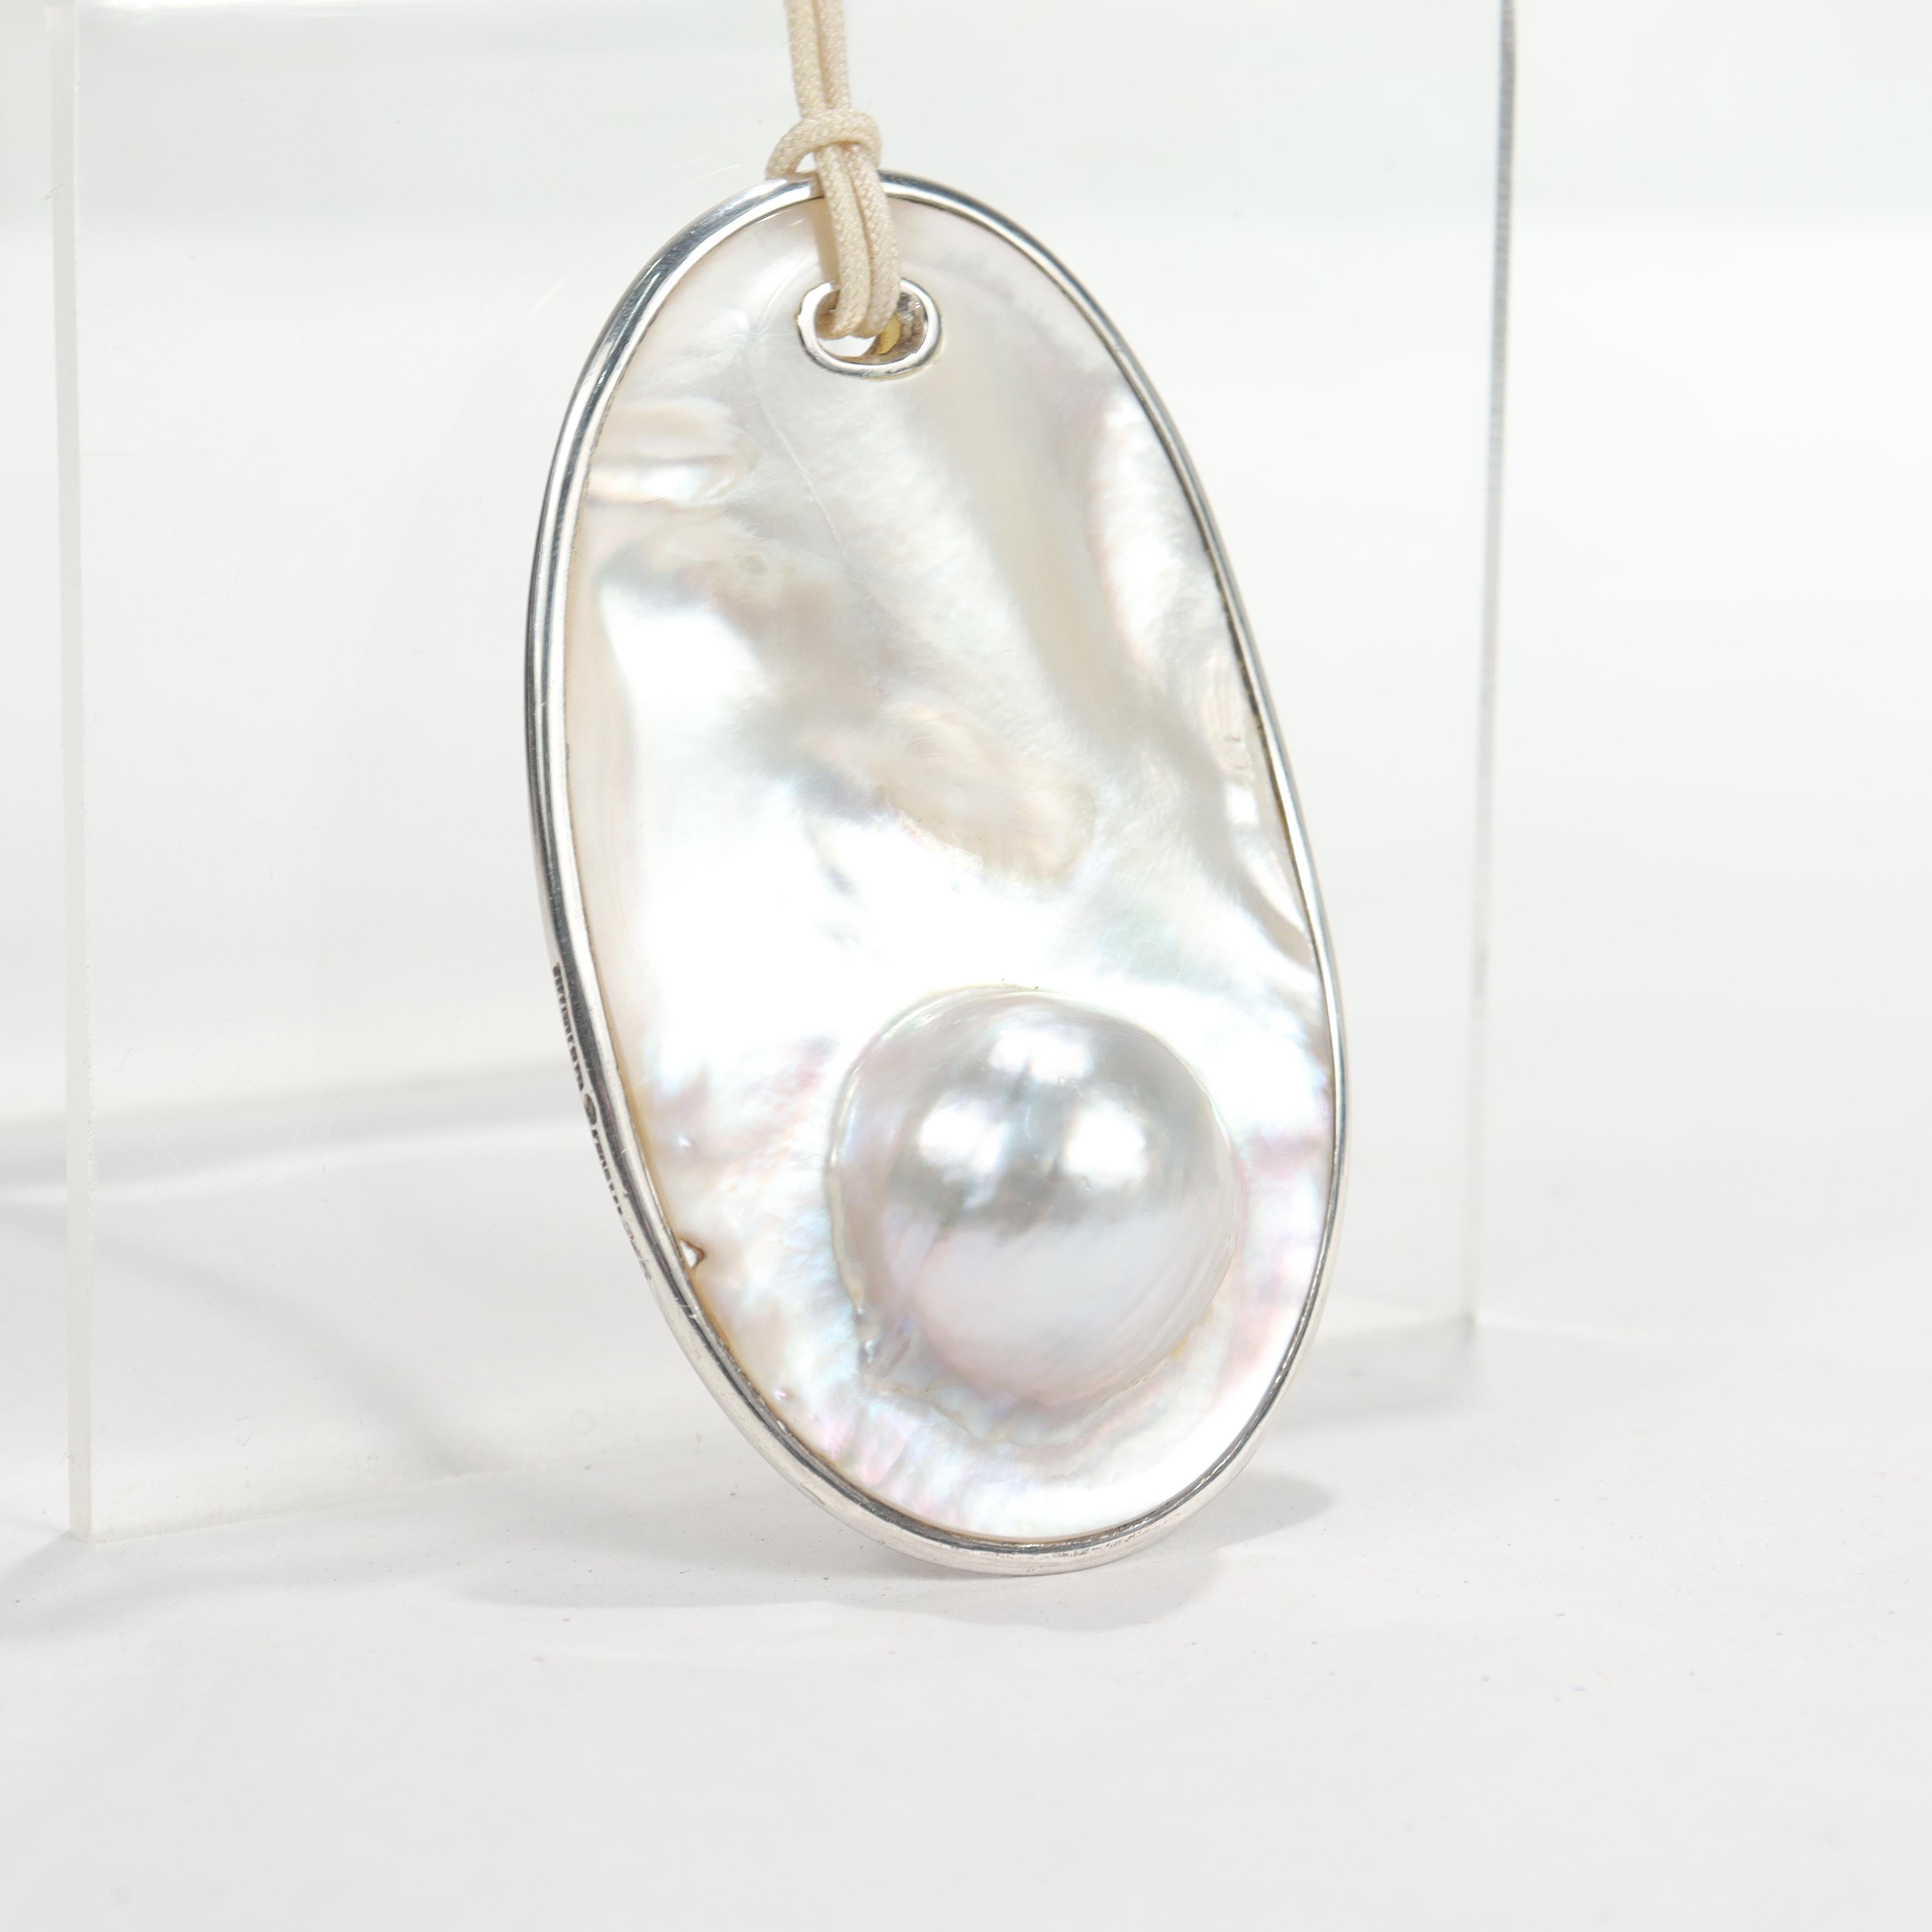 Elsa Peretti Tiffany & Co. Blister Pearl & Sterling Silver Pendant Necklace 5